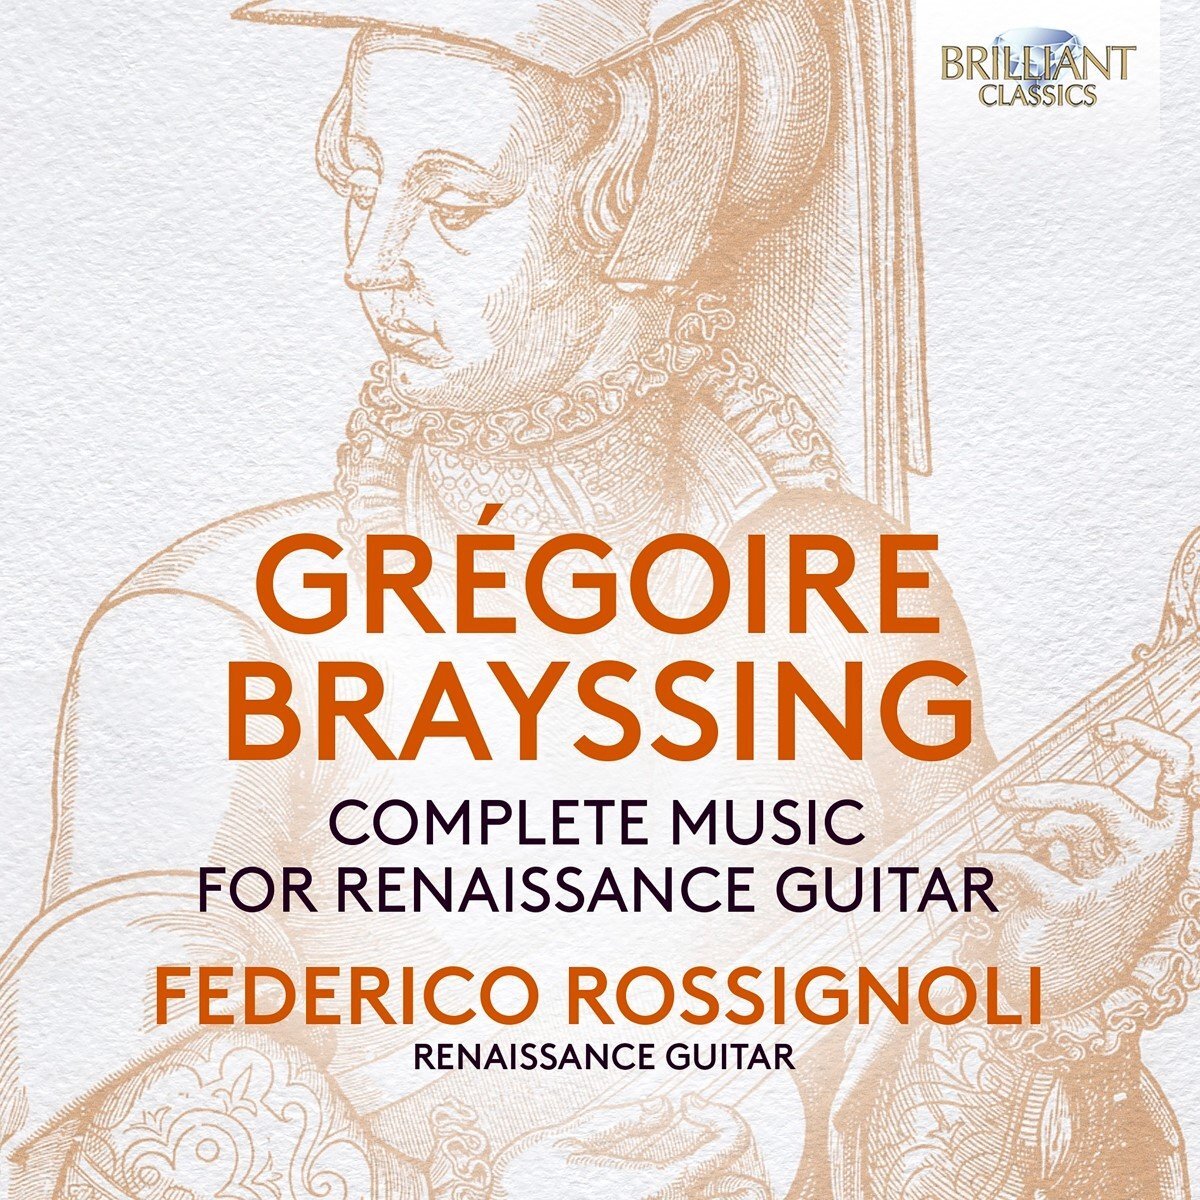 Brilliant Classics Brayssing: Complete Music For Renaissance Guitar (CD)